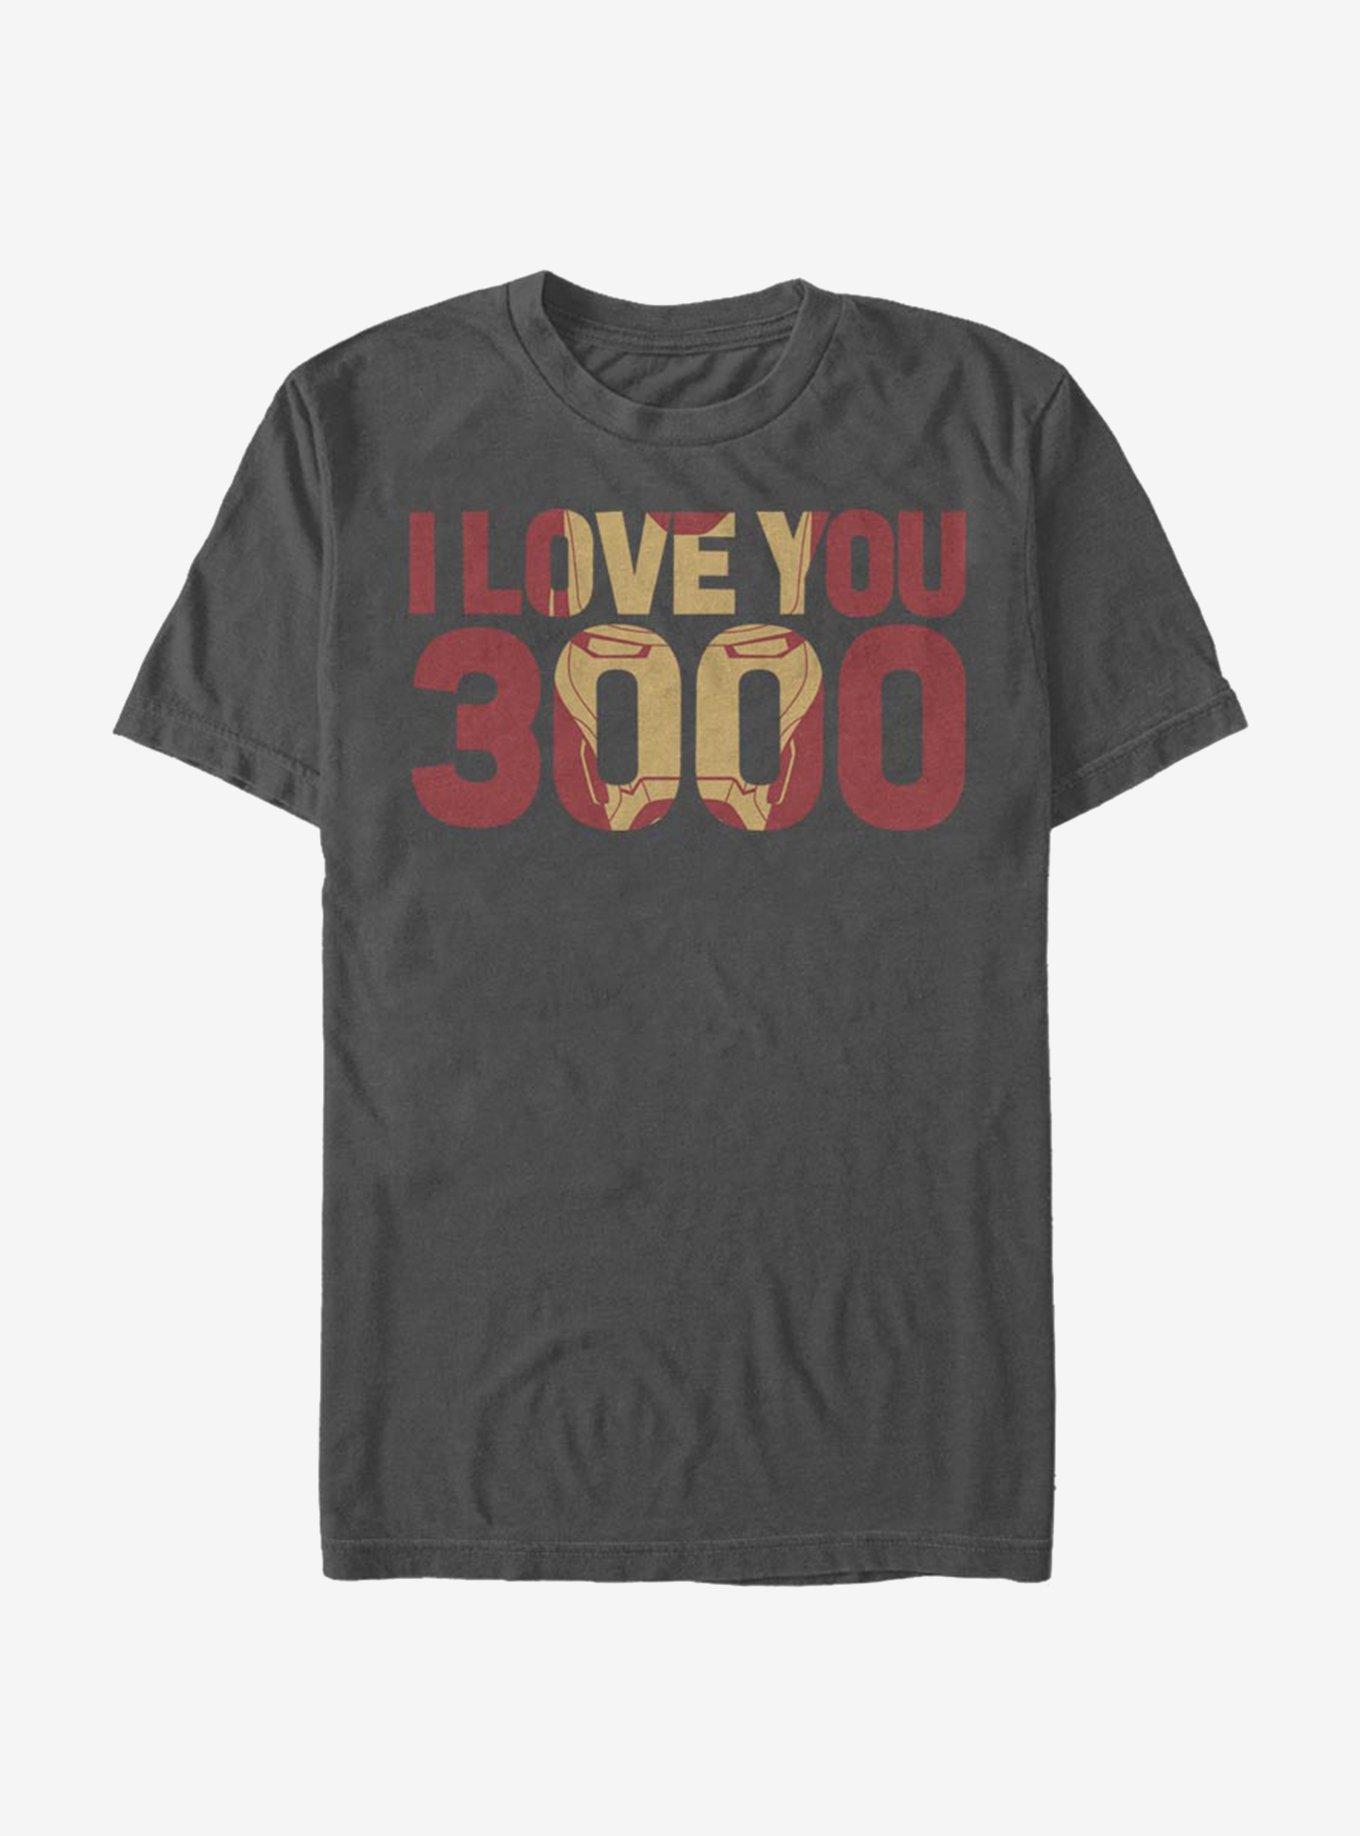 Marvel Avengers: Endgame Love You 3000 T-Shirt, , hi-res